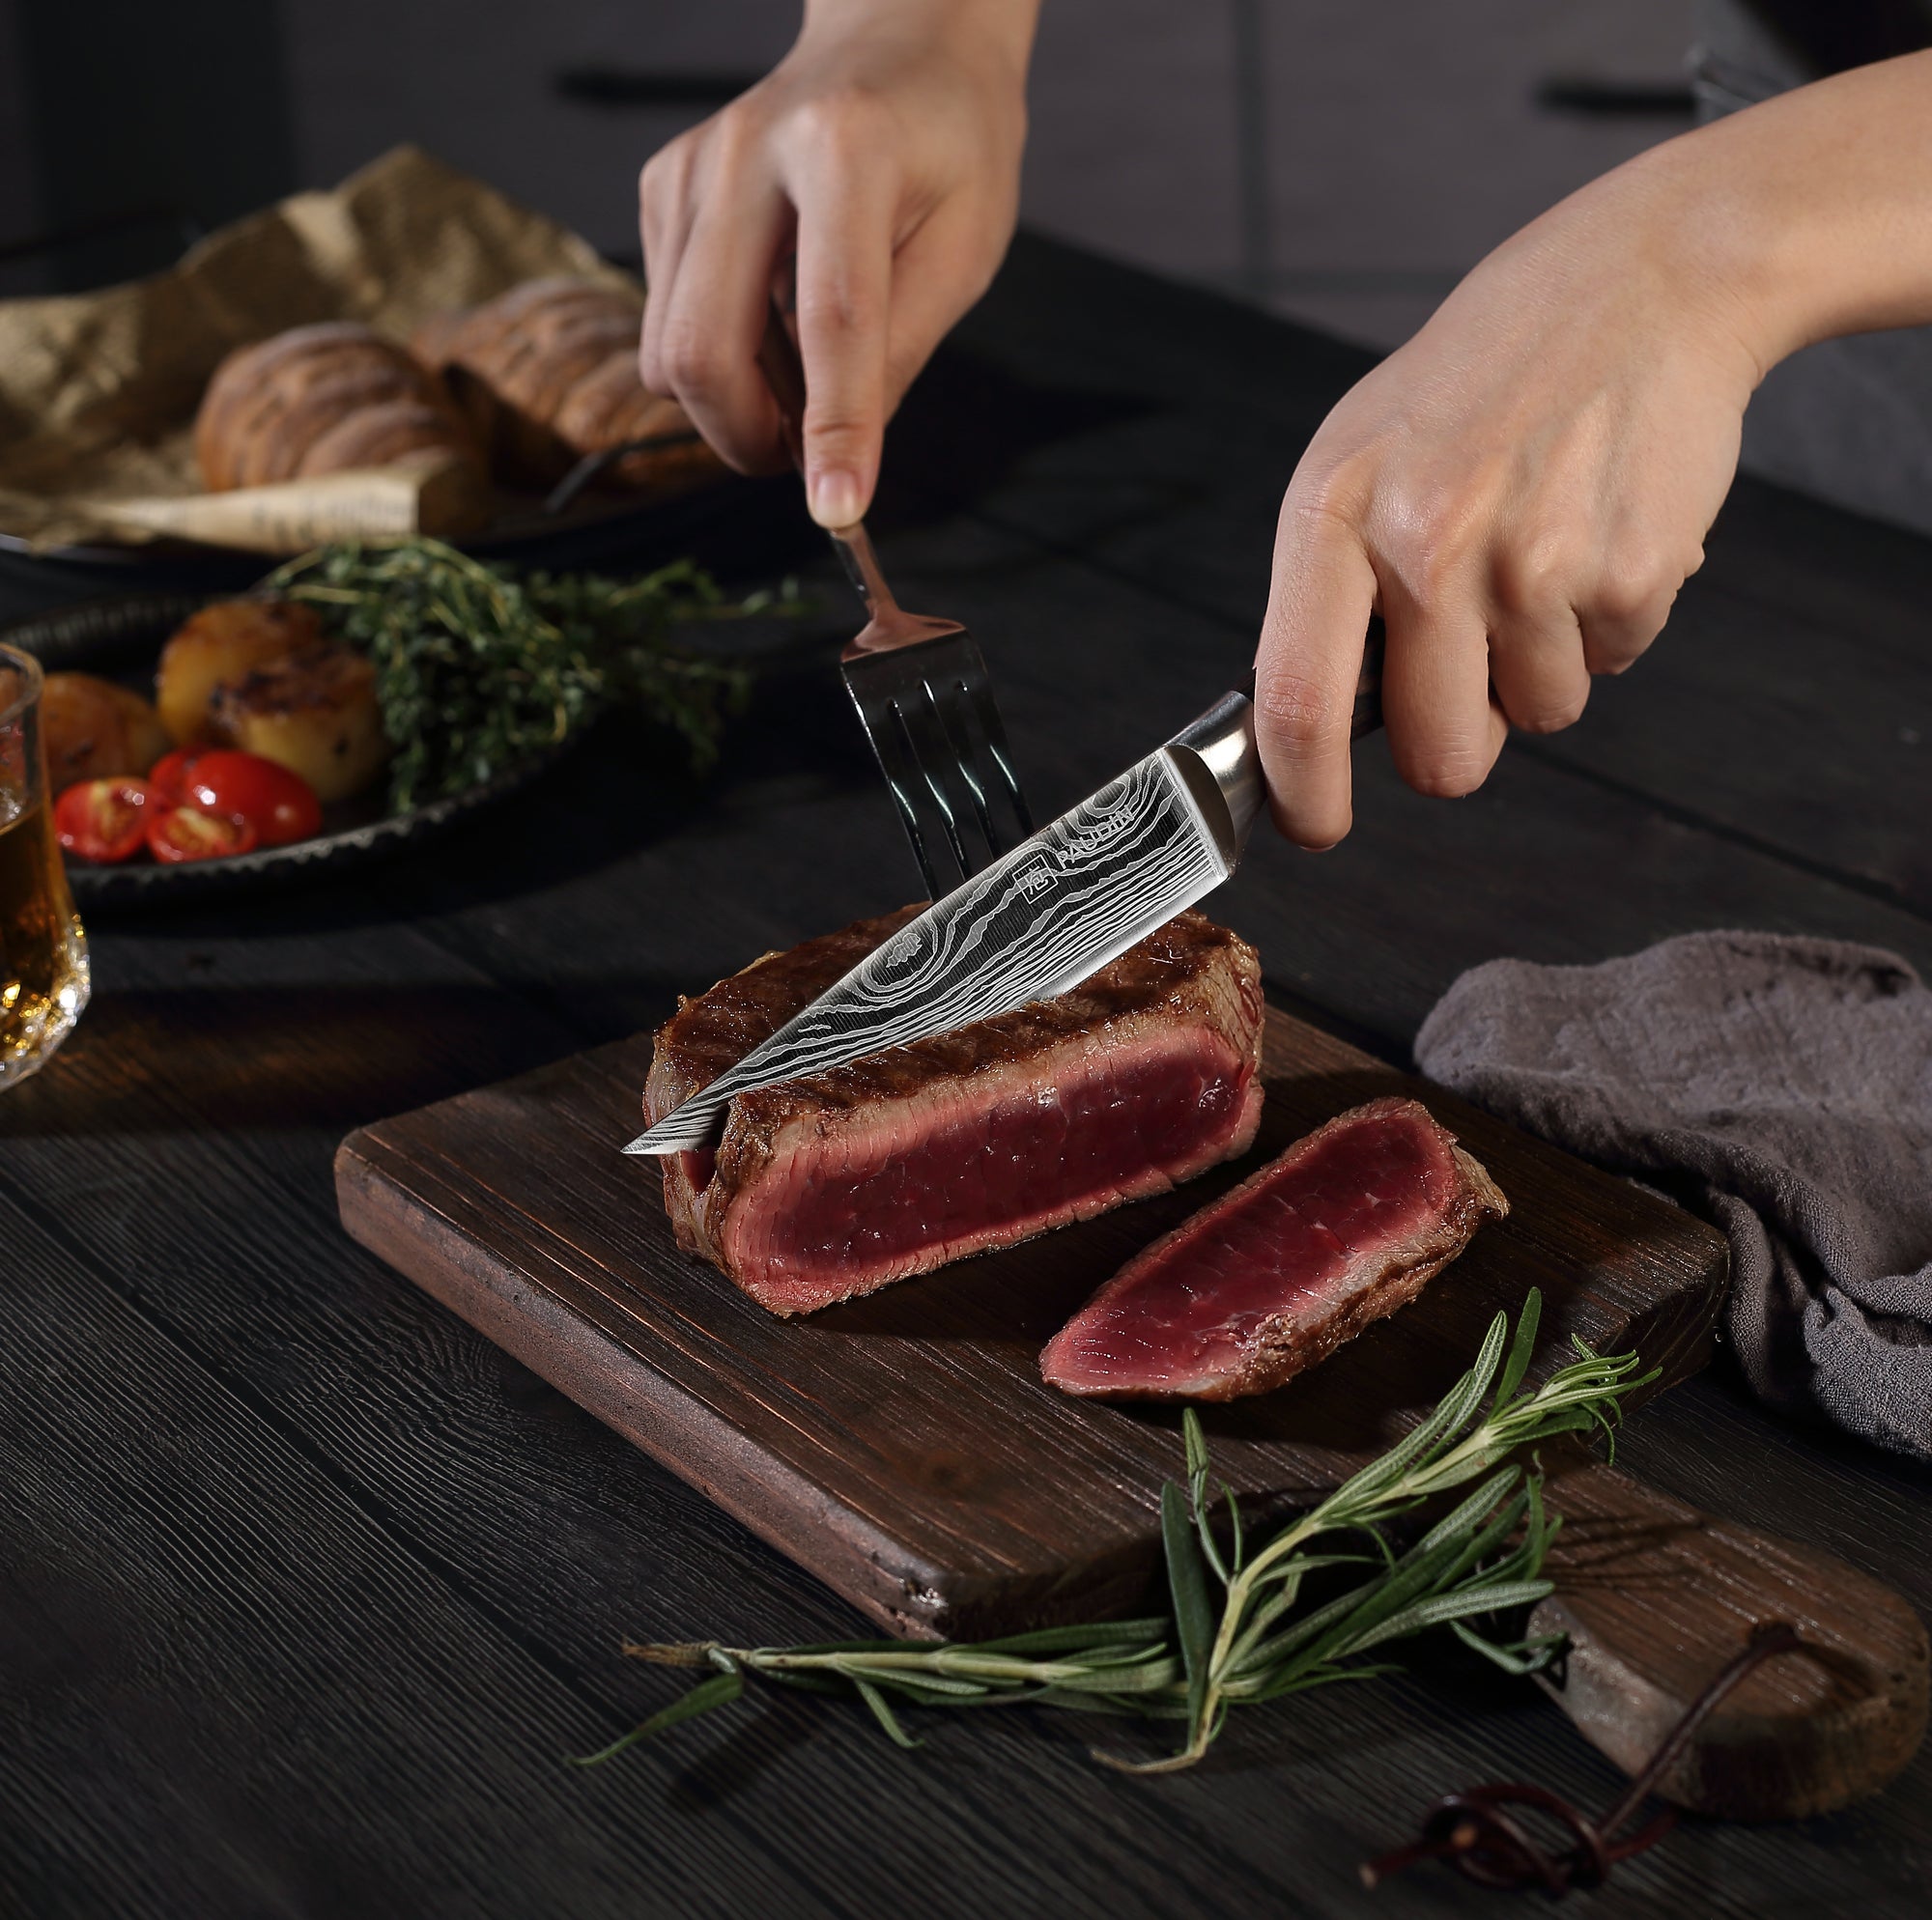 PAUDIN Steak Knives Set of 6, Kitchen Steak Knife 4.5 Inch, High